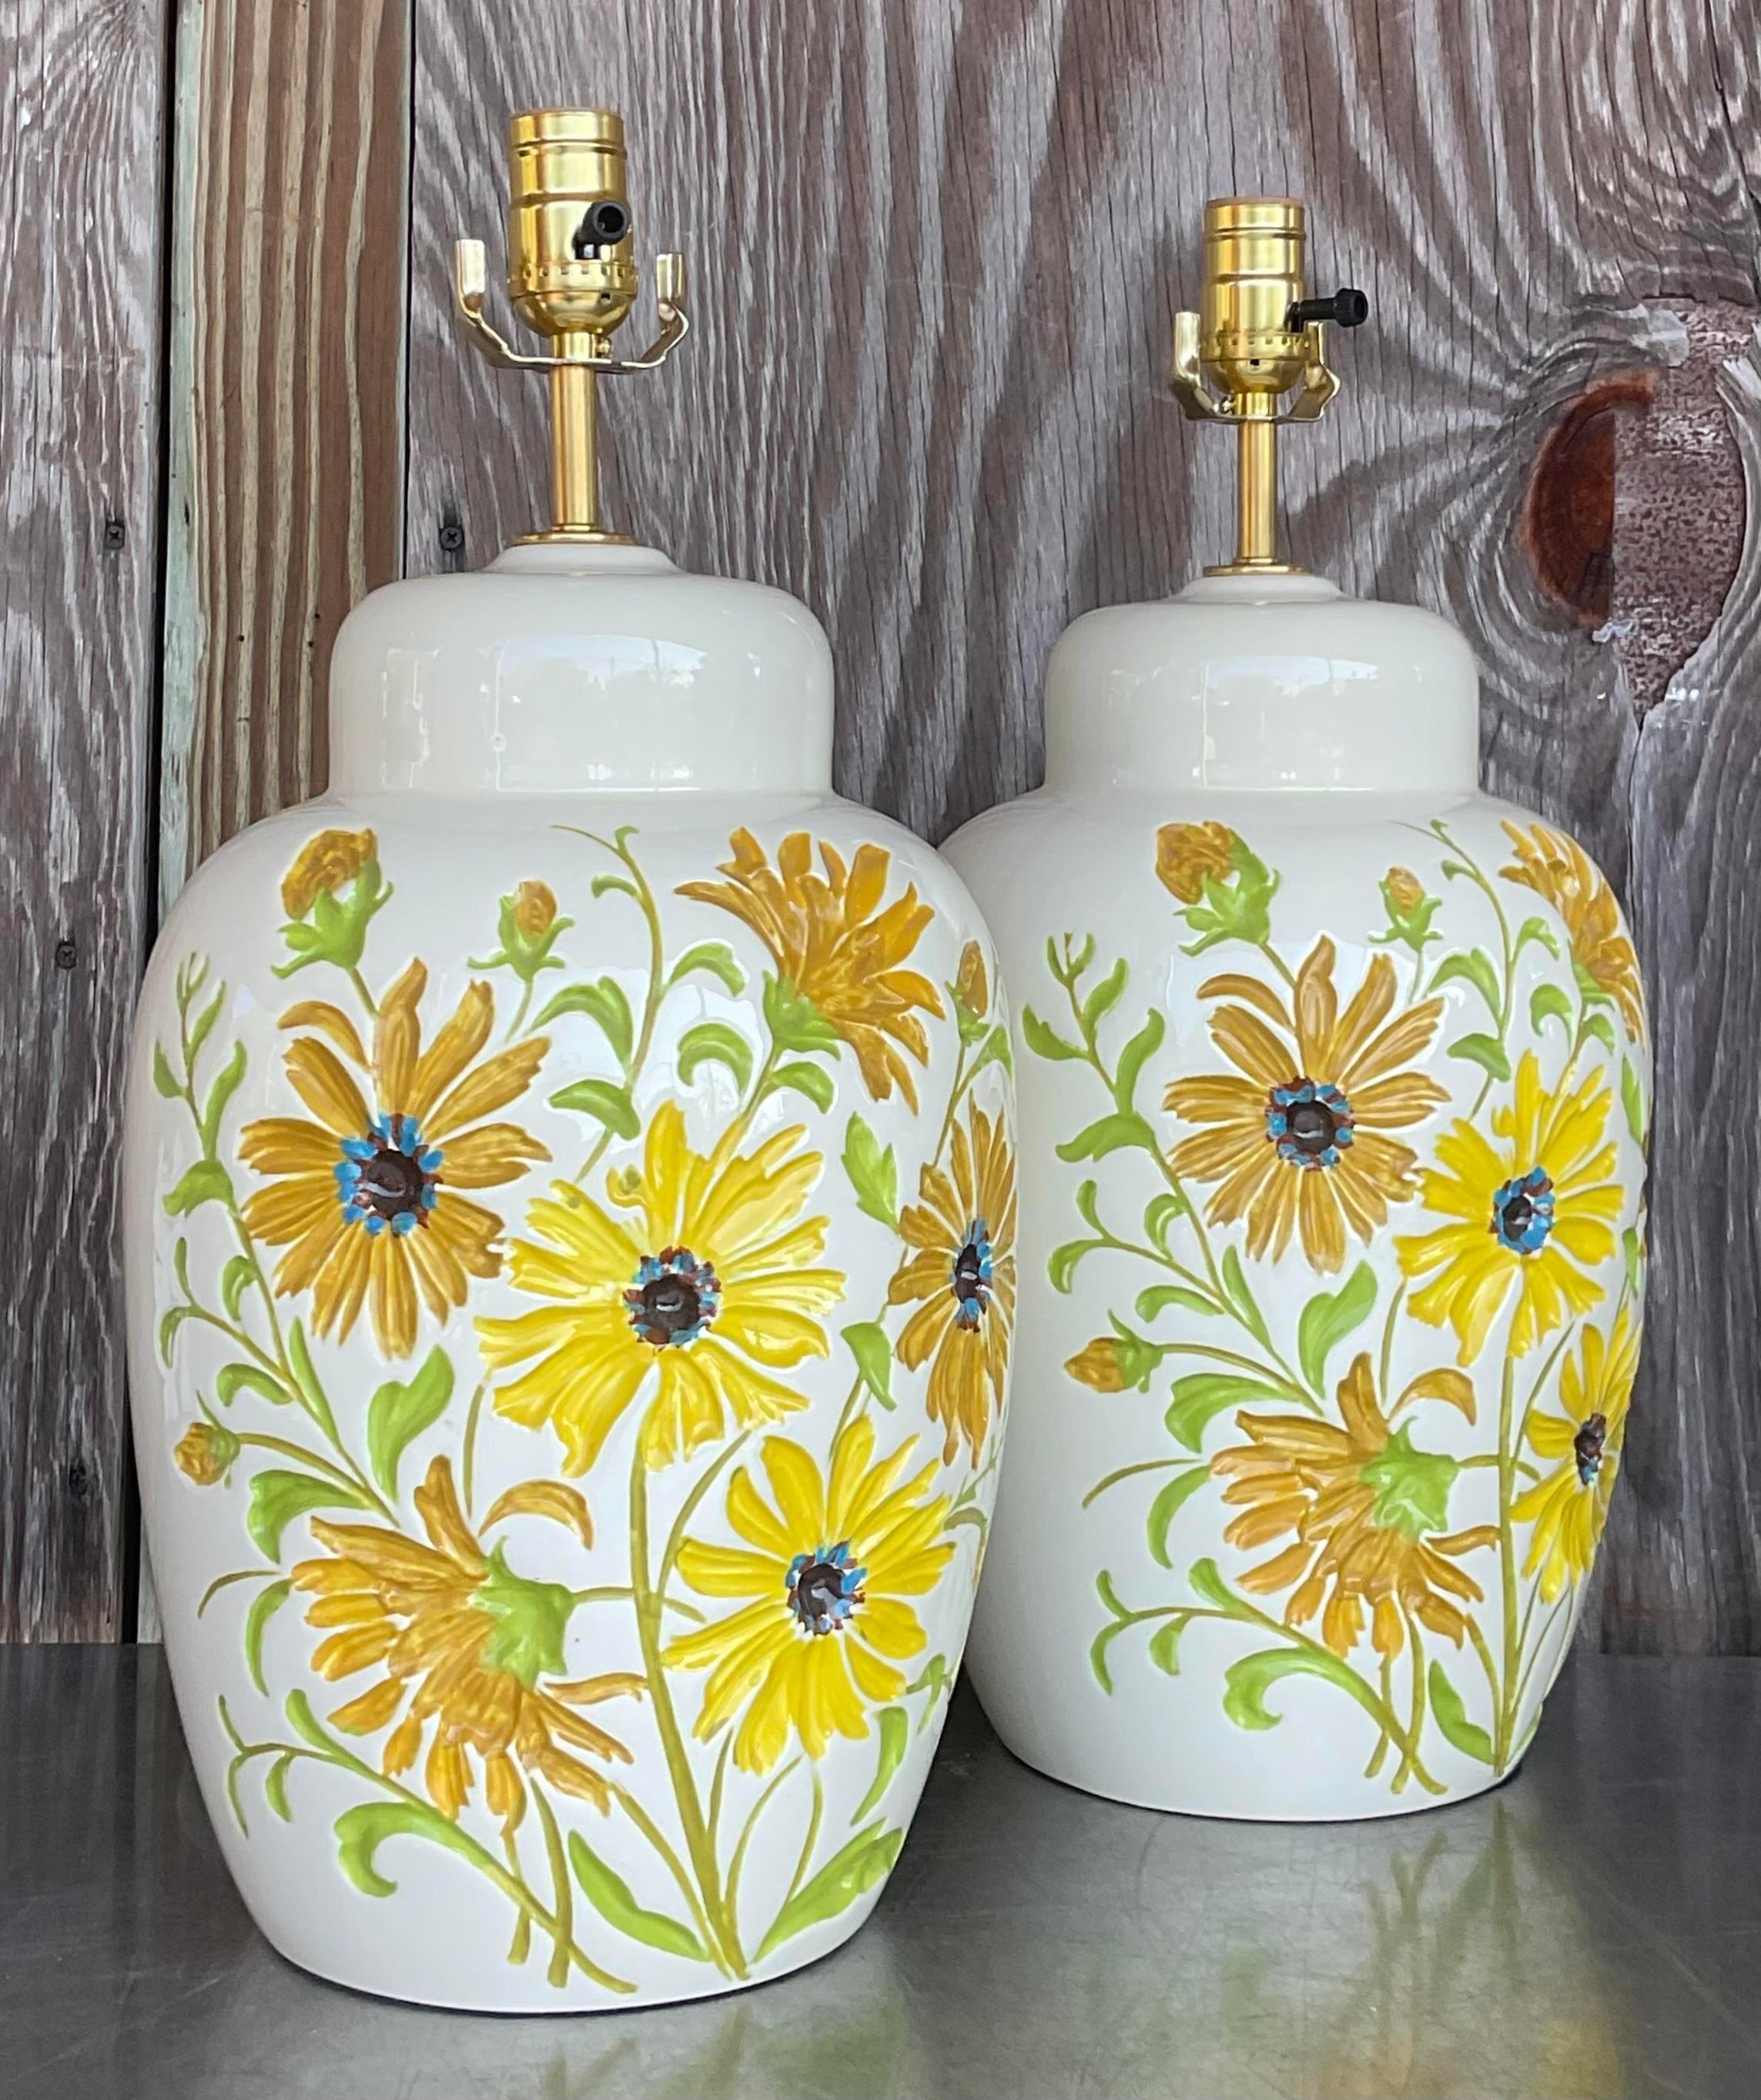 American Vintage Boho Glazed Ceramic Daisy Lamps - a Pair